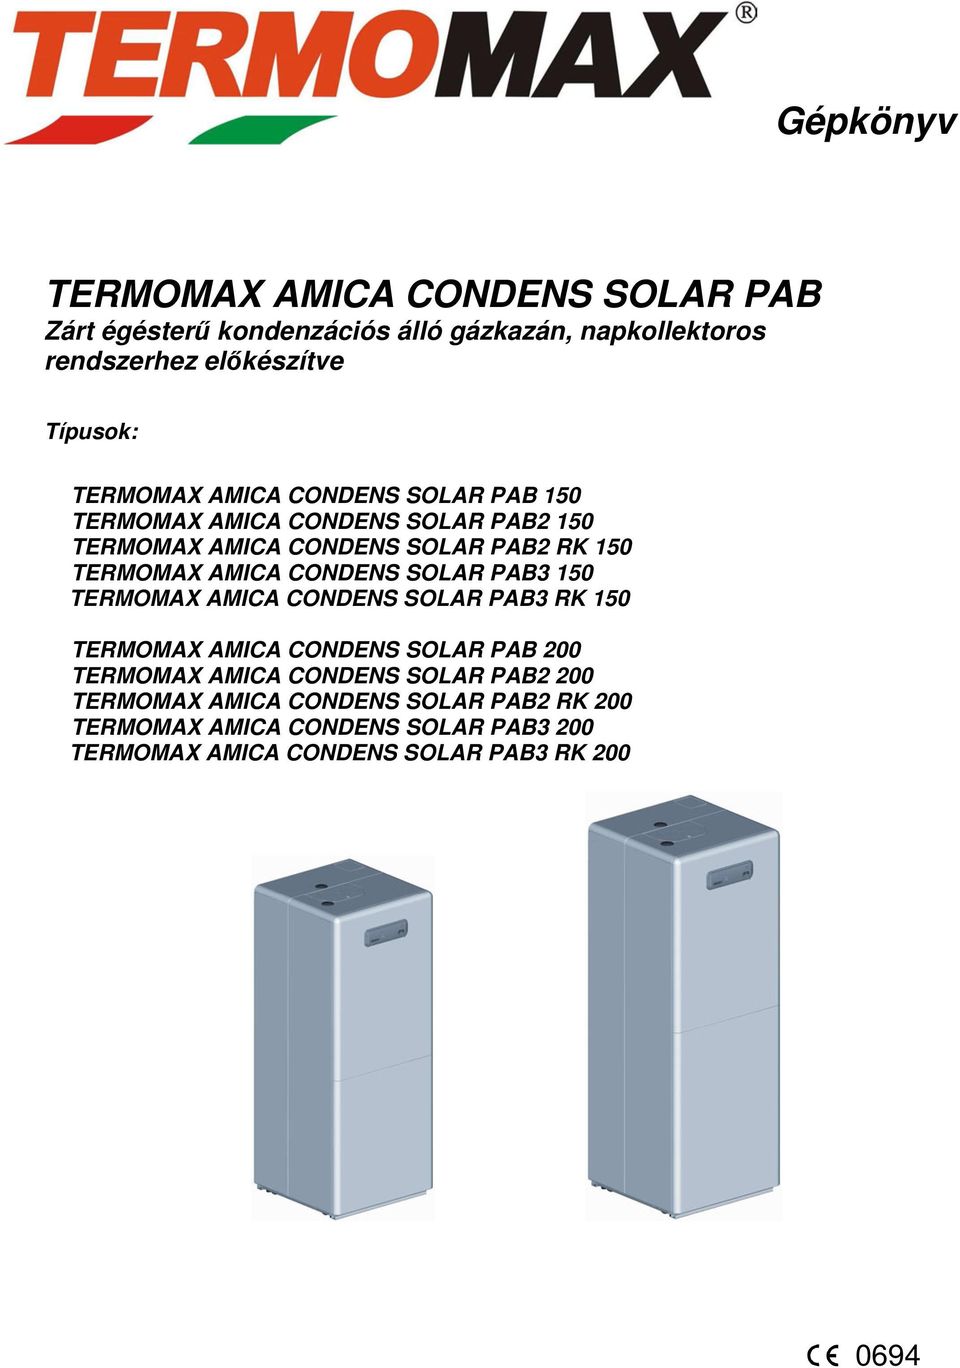 CONDENS SOLAR PAB3 150 TERMOMAX AMICA CONDENS SOLAR PAB3 RK 150 TERMOMAX AMICA CONDENS SOLAR PAB 200 TERMOMAX AMICA CONDENS SOLAR